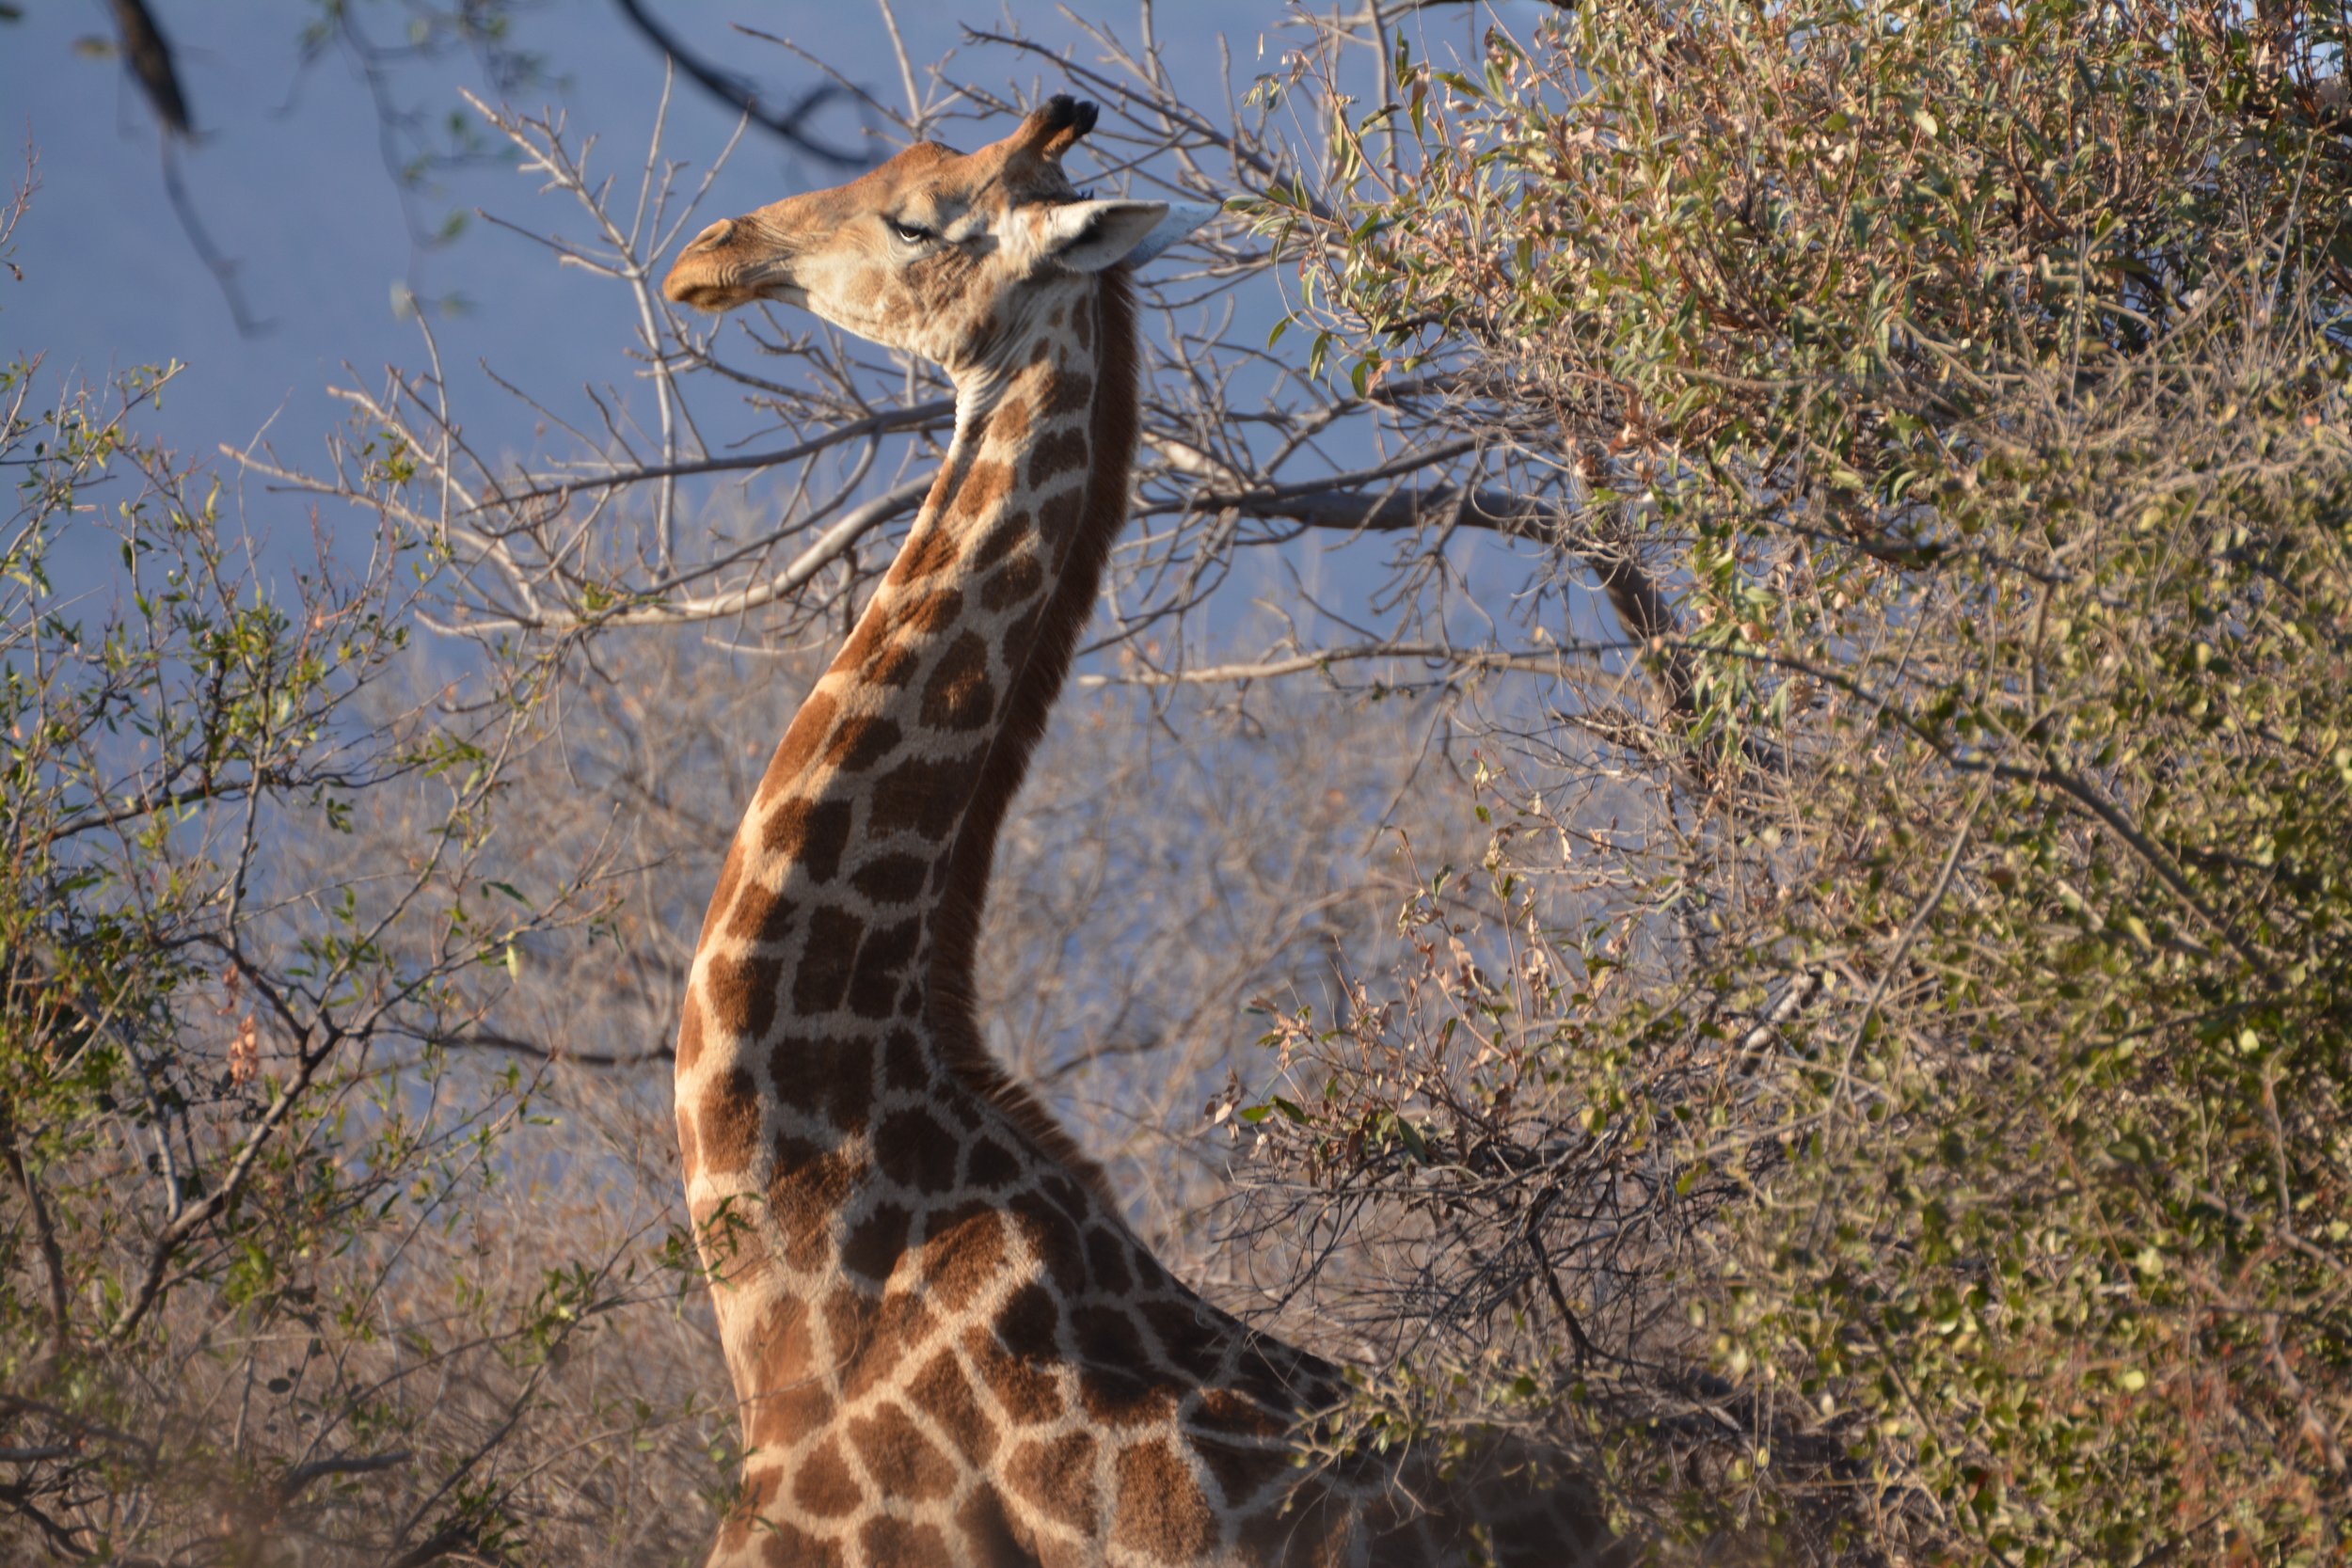 Blouberg nature reserve Limpopo Zuid-Afrika (6).jpeg